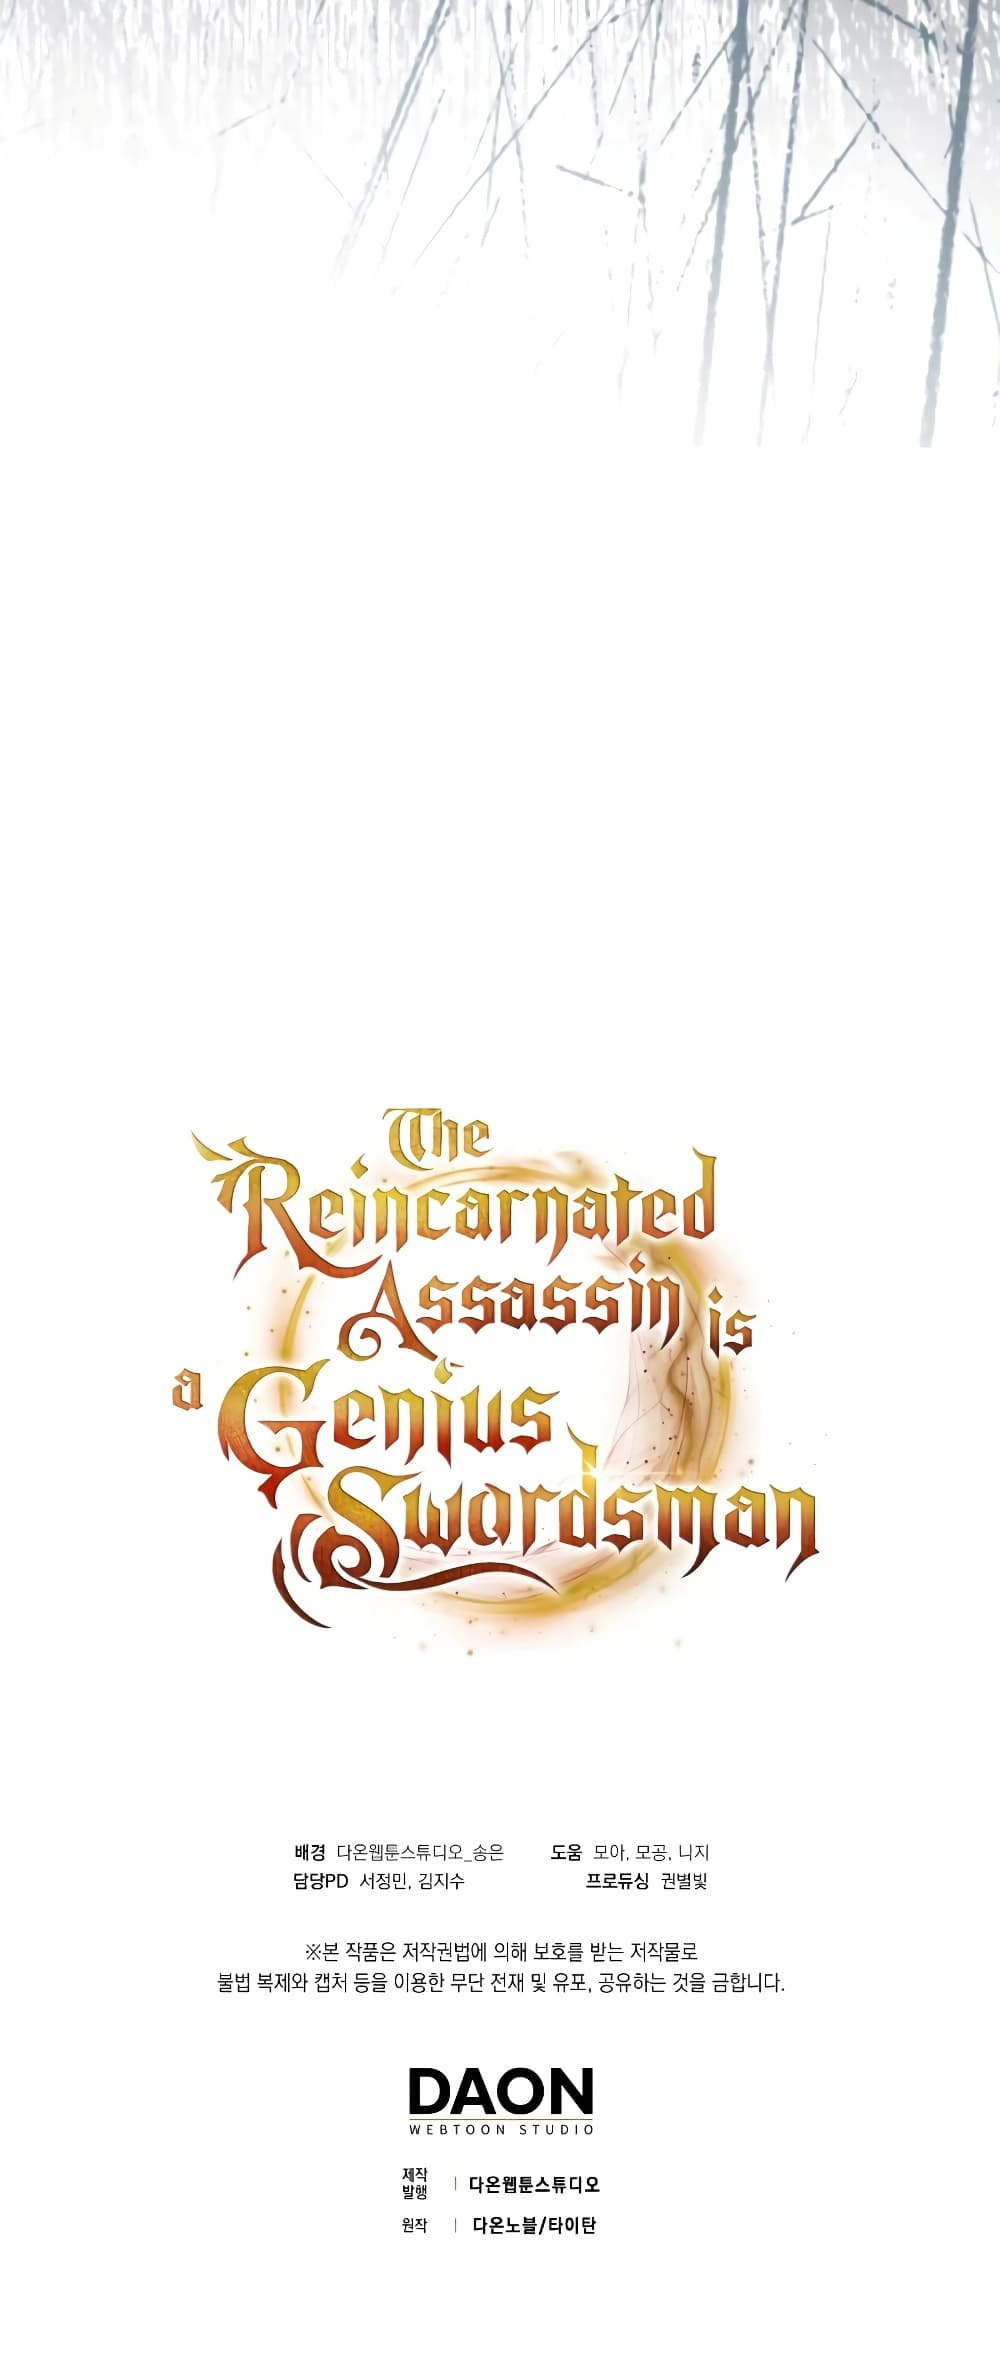 The Reincarnated Assassin is a Genius Swordsman 28-28